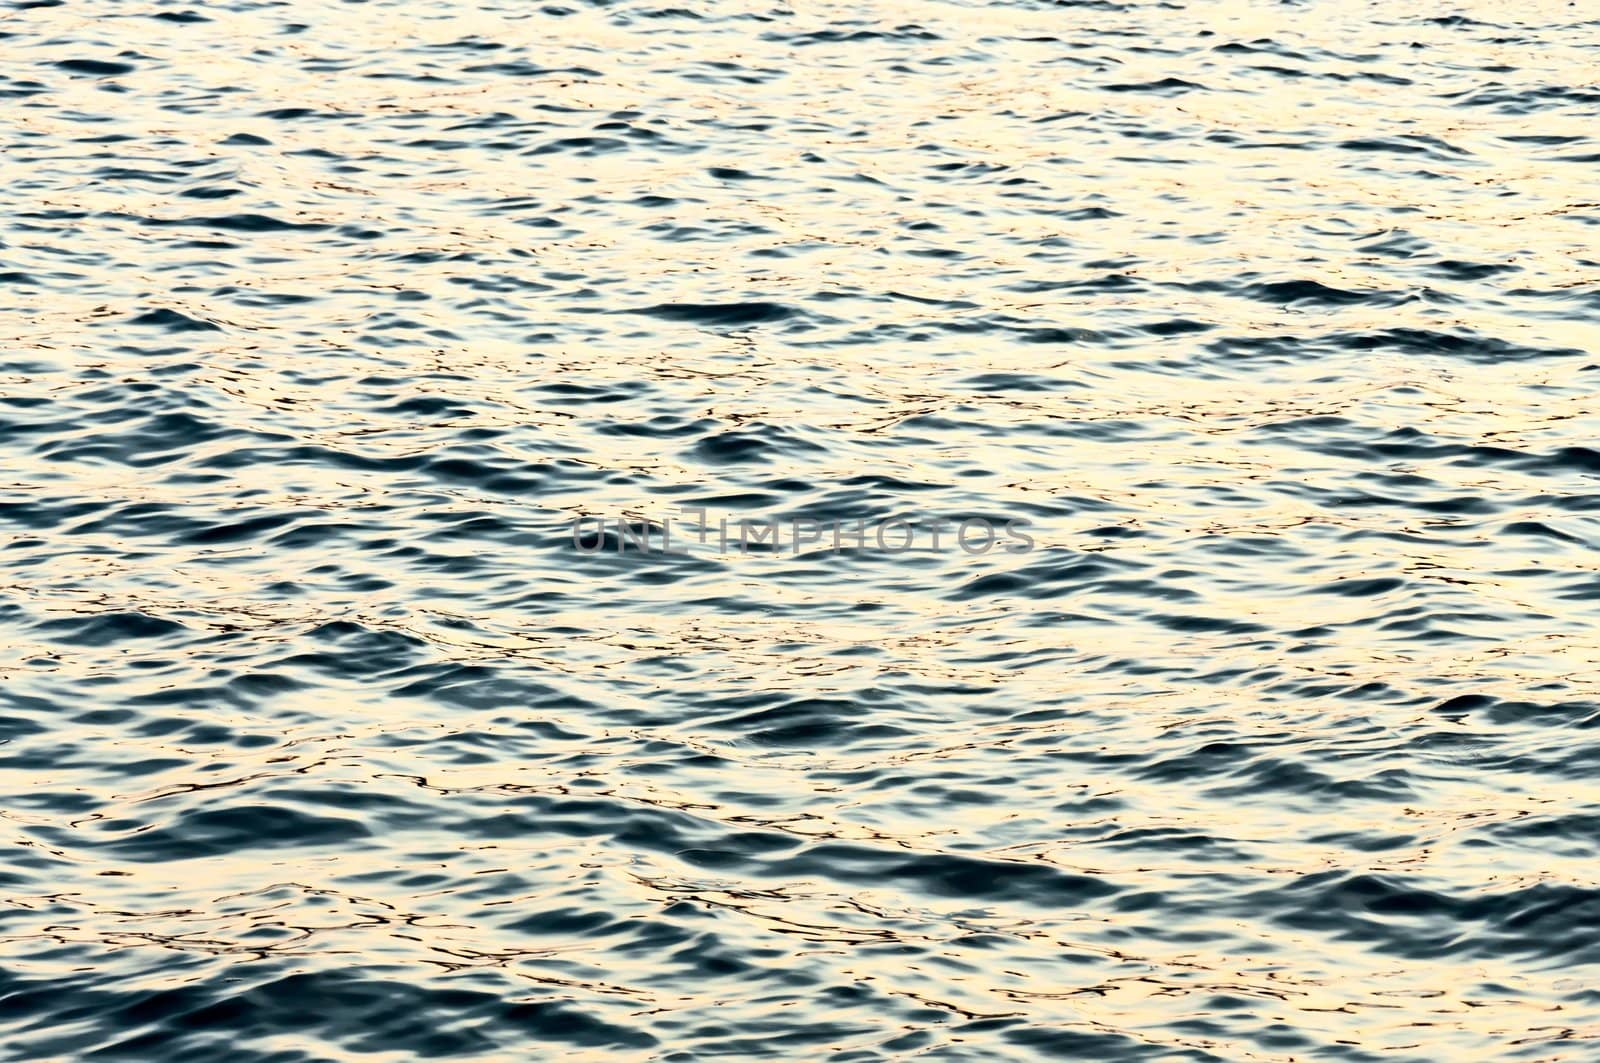 Abstract background - aqua texture, sea water, horizontal view.